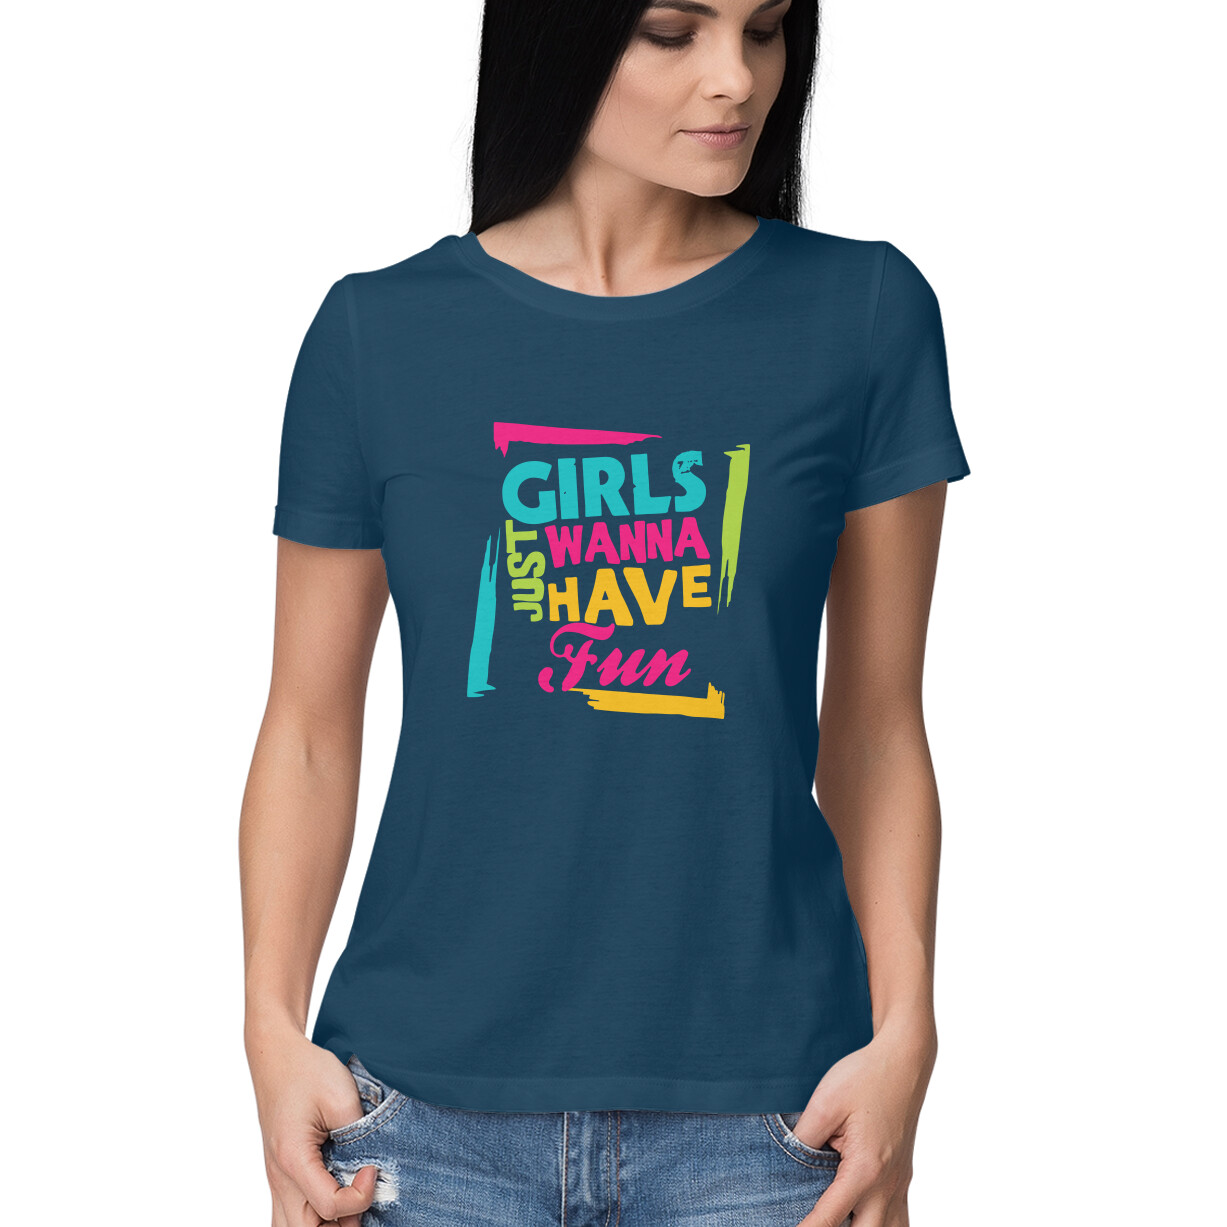 Girls Just Wanna Have Fun femme ajustée Slogan Imprimé T-shirt womans Top 